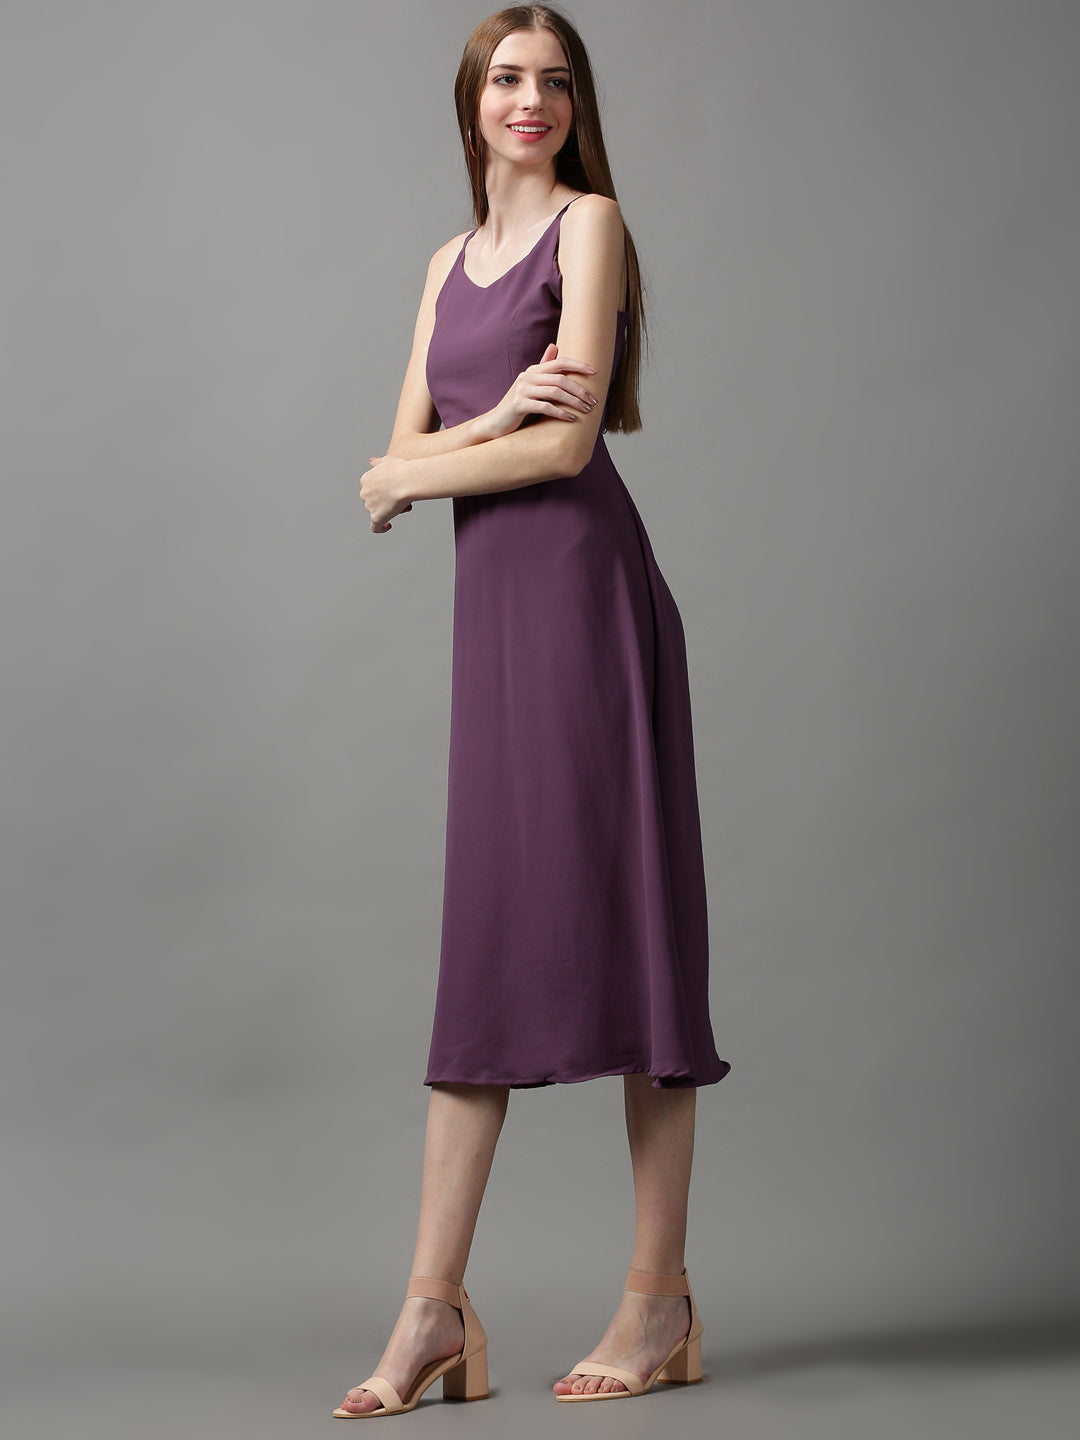 Women's Violet Solid A-Line Dress